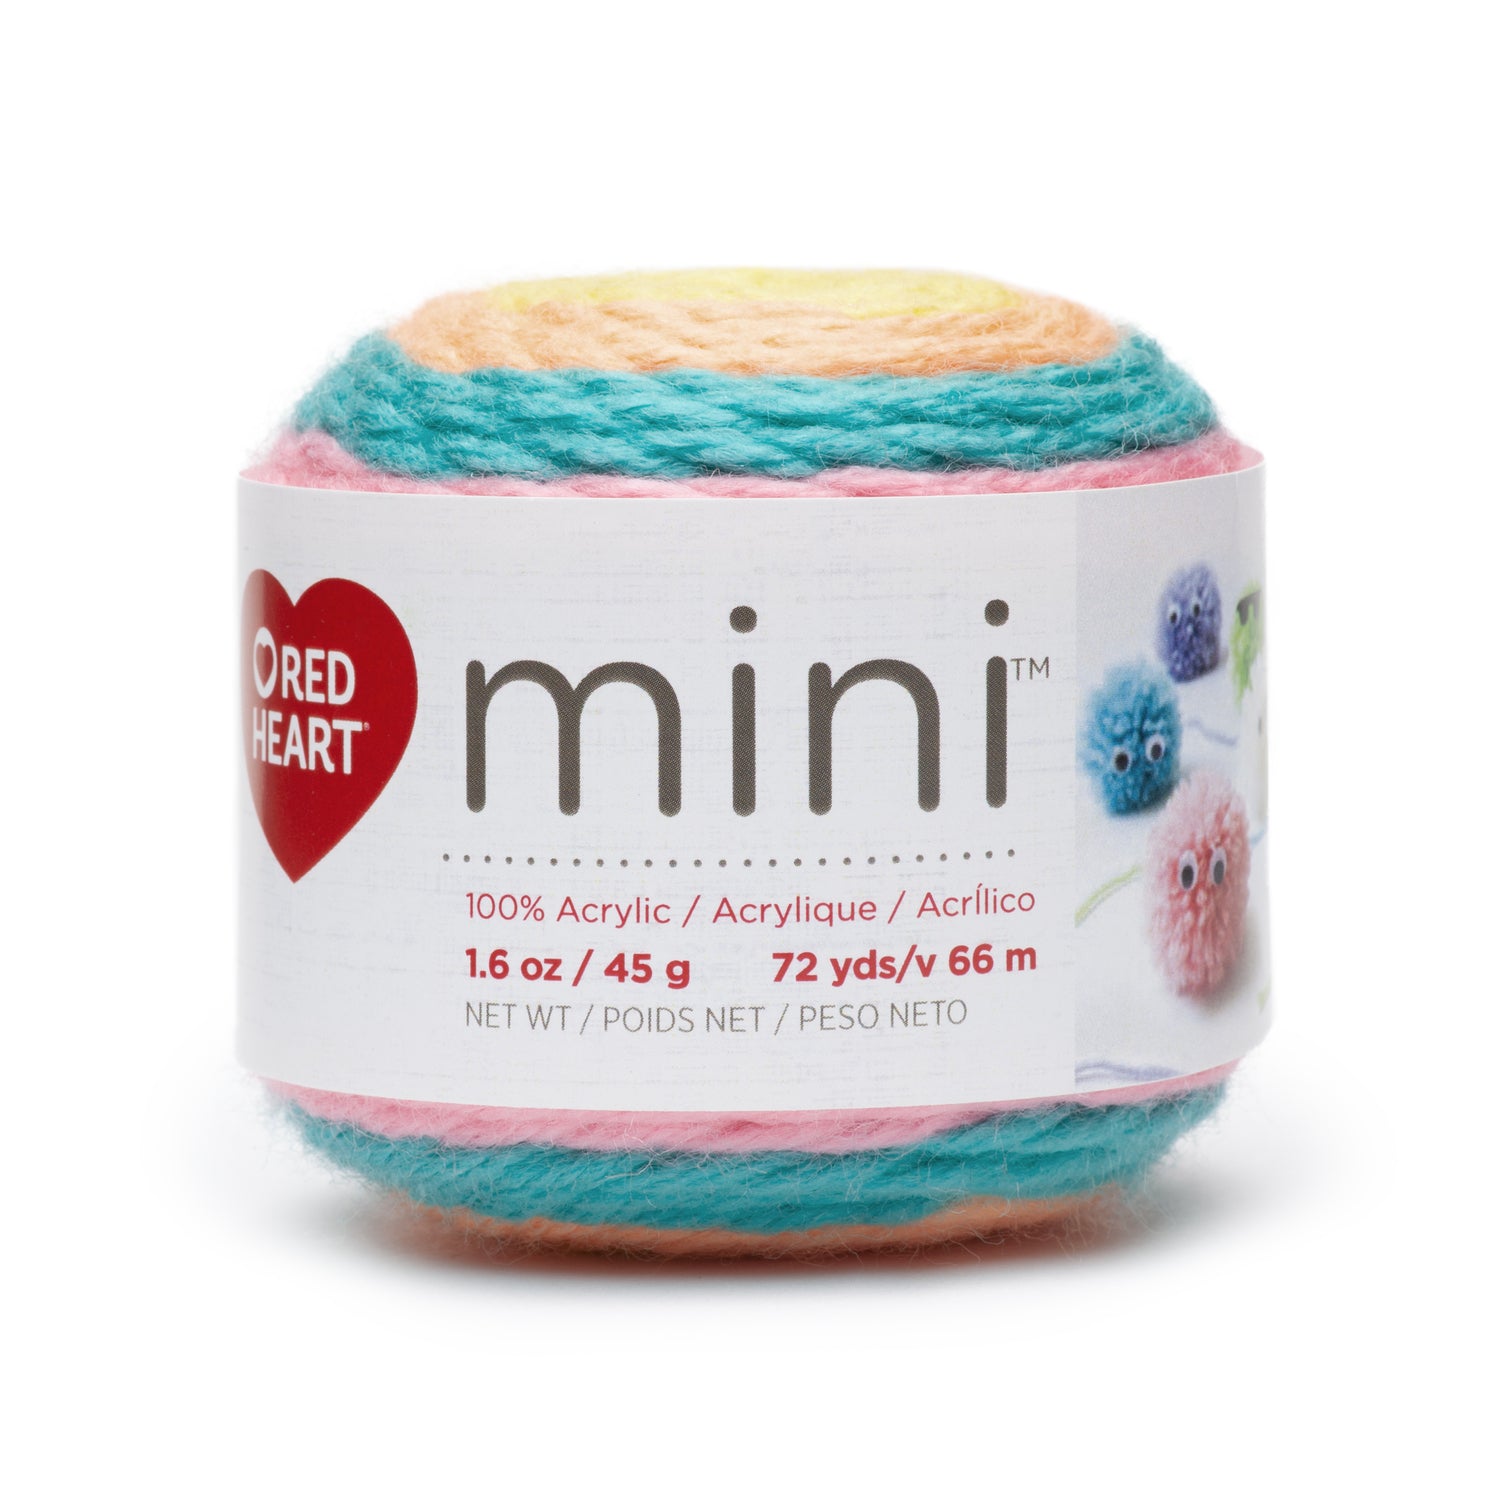 Red Heart Mini Yarn - Clearance shades